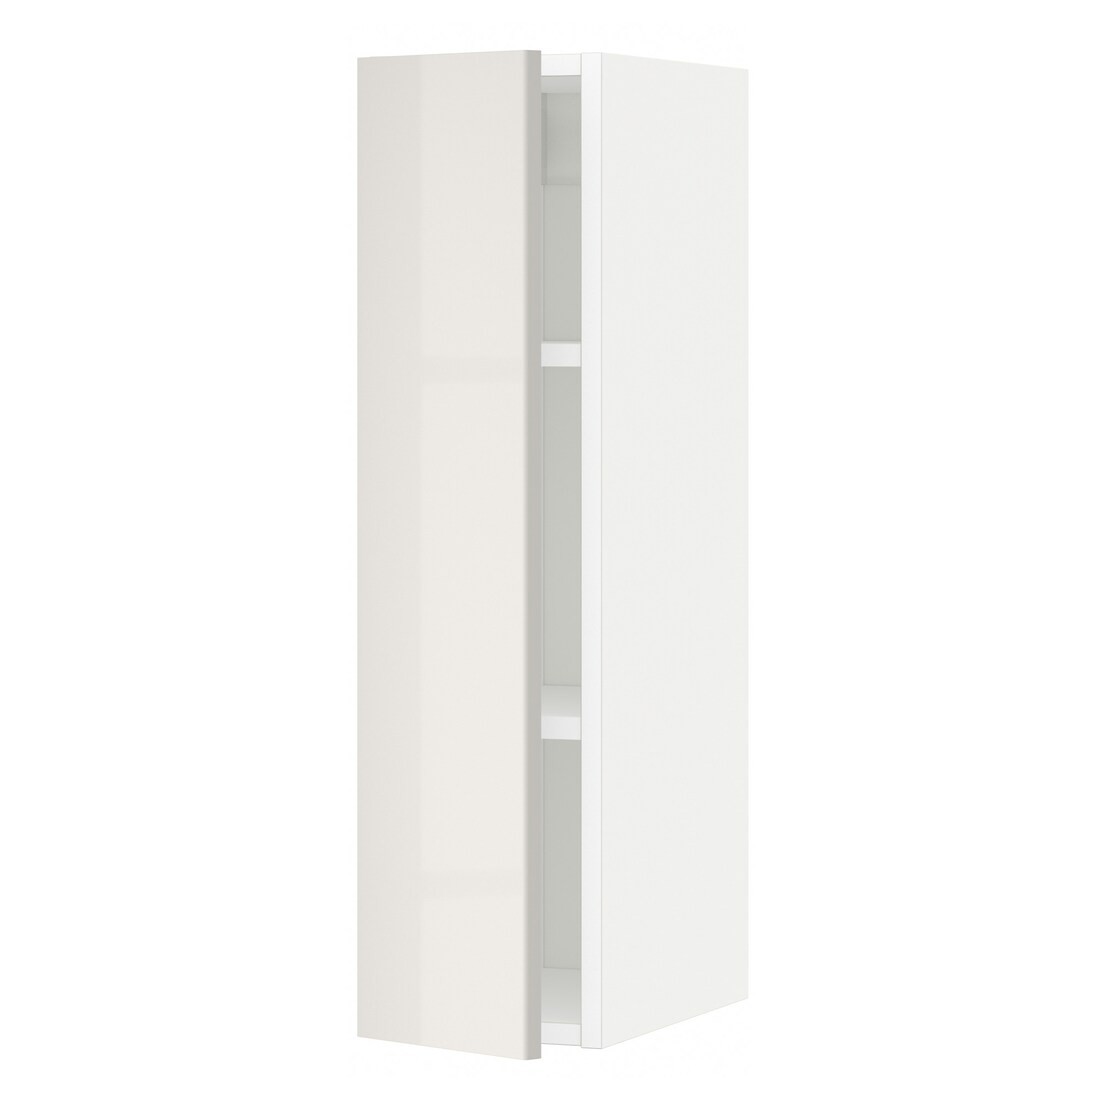 IKEA METOD МЕТОД Шкаф навесной с полками, белый / Ringhult светло-серый, 20x80 см 79464898 | 794.648.98